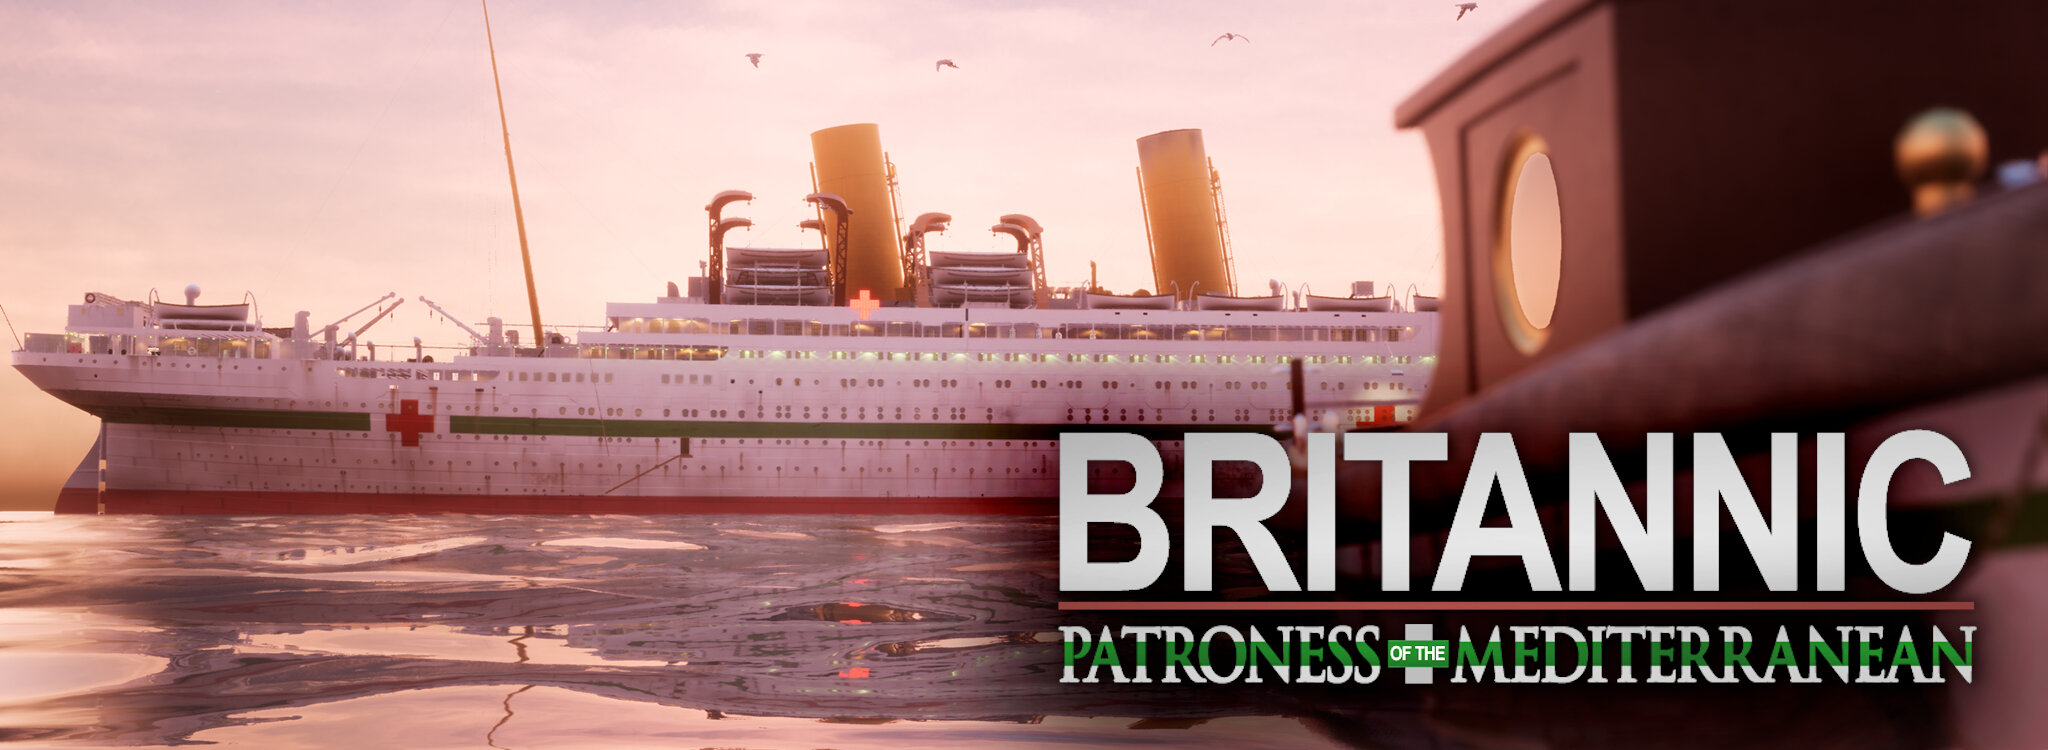 Britannic Patroness Of The Mediterranean Titanic Honor And Glory